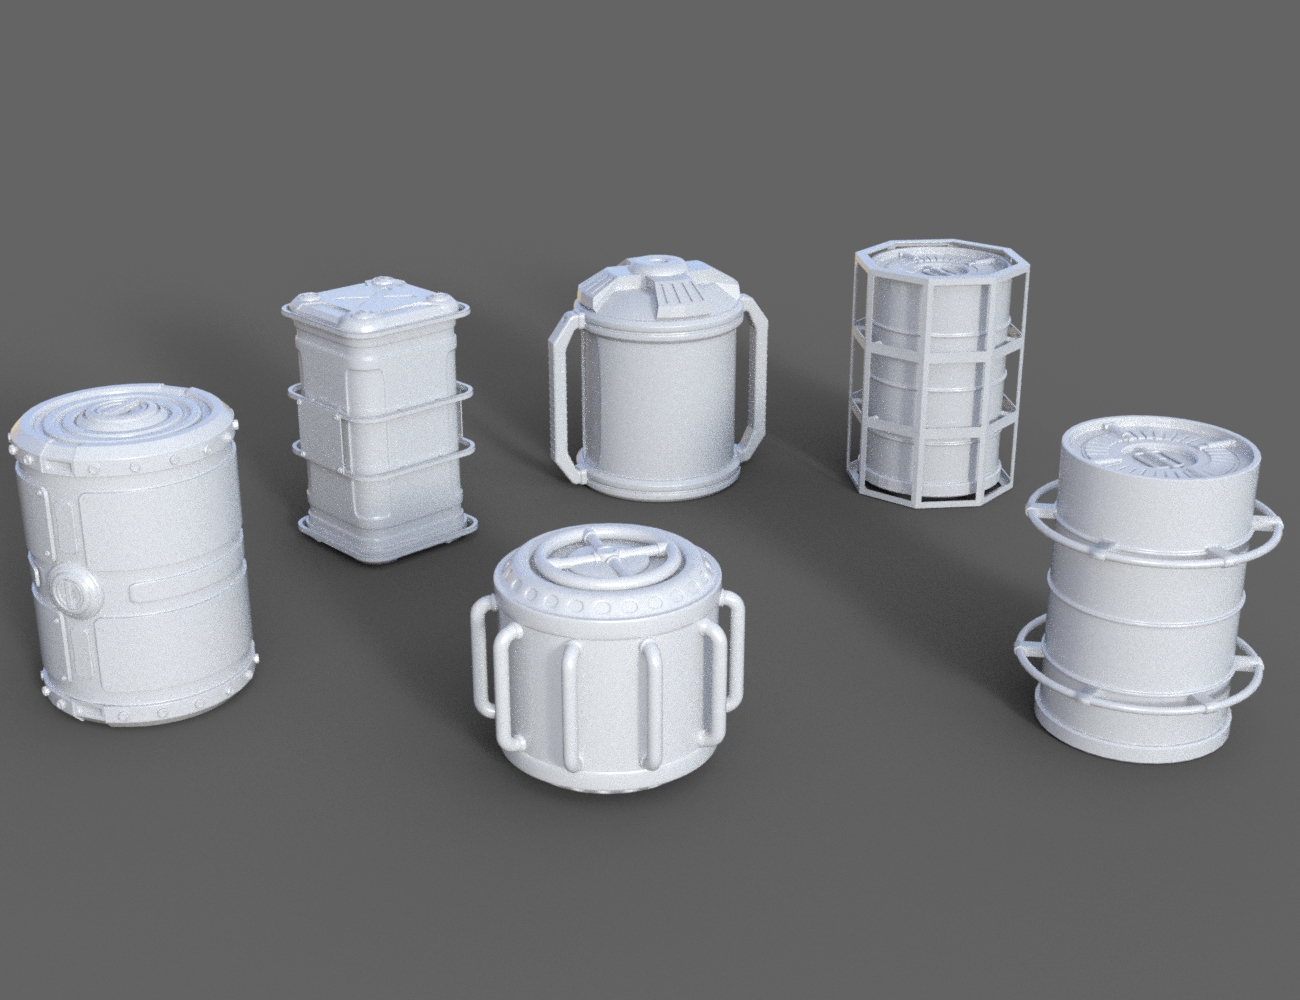 Sci-Fi Barrels by: AcharyaPolina, 3D Models by Daz 3D